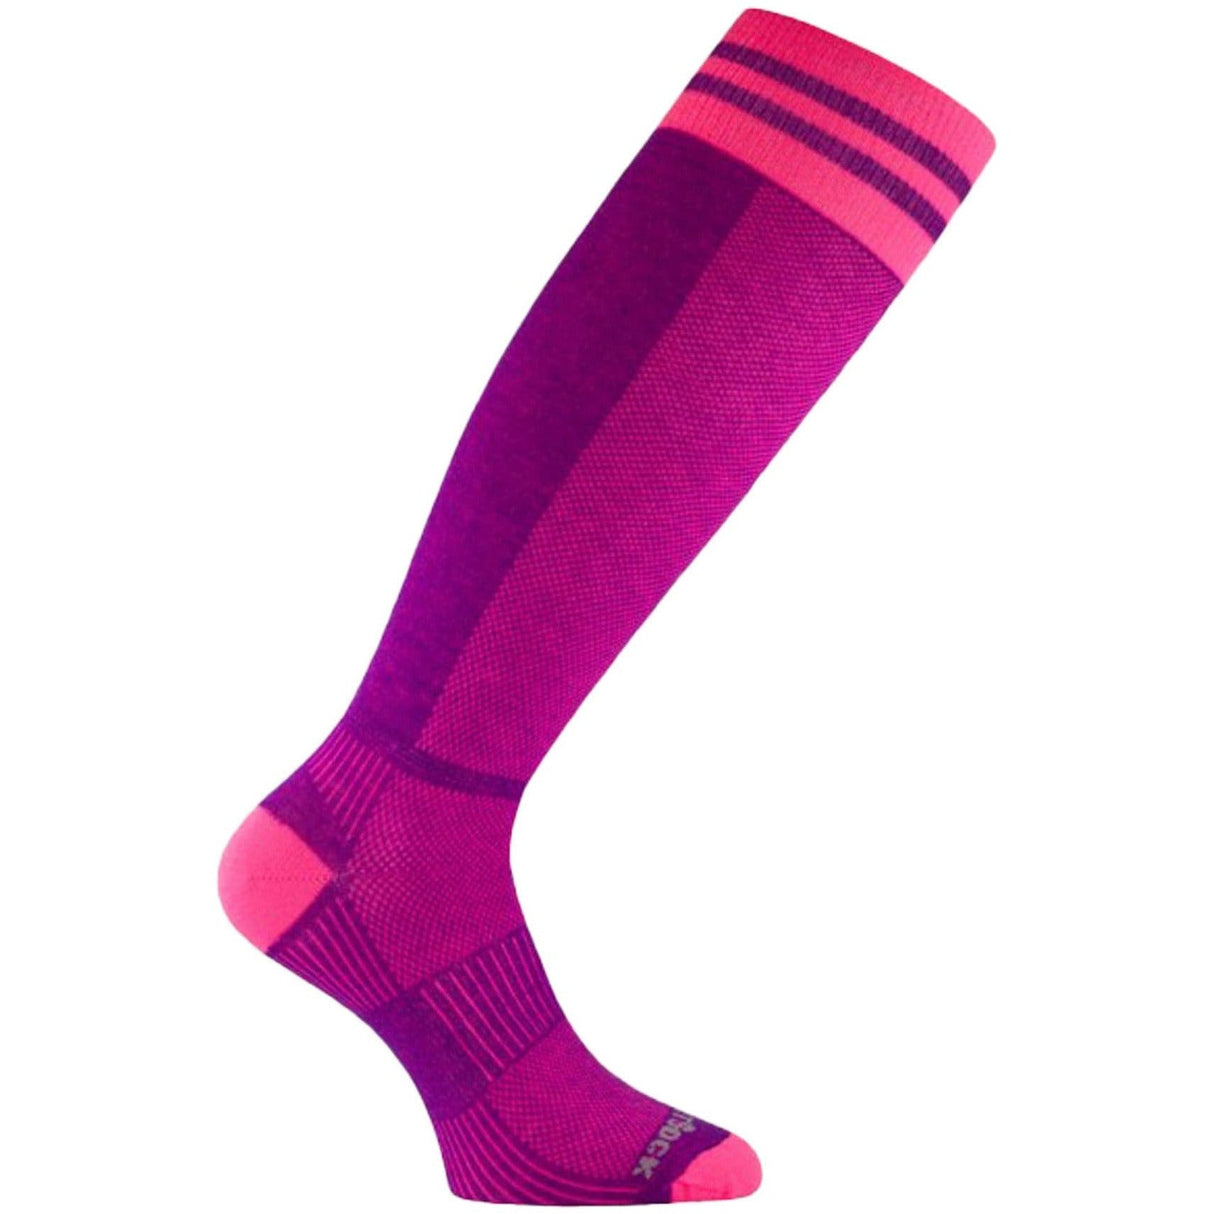 Wrightsock Coolmesh II OTC Anti-Blister Socks  -  Small / Plum/Pink Stripes